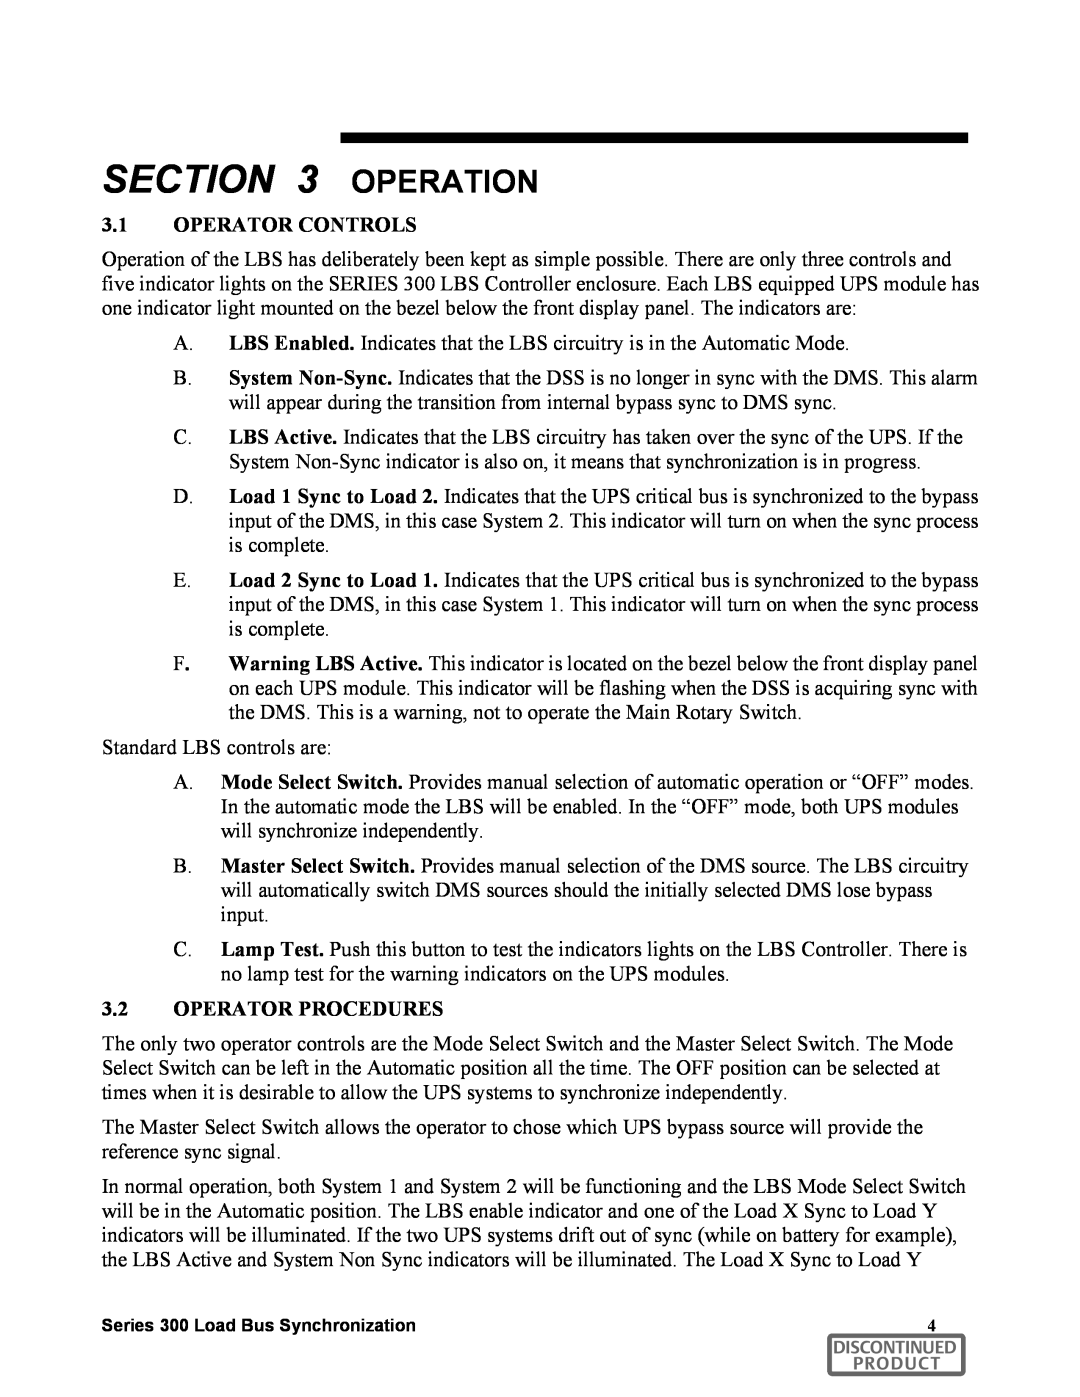 Liebert 300 manual 3.1OPERATOR CONTROLS, 3.2OPERATOR PROCEDURES, Operation 